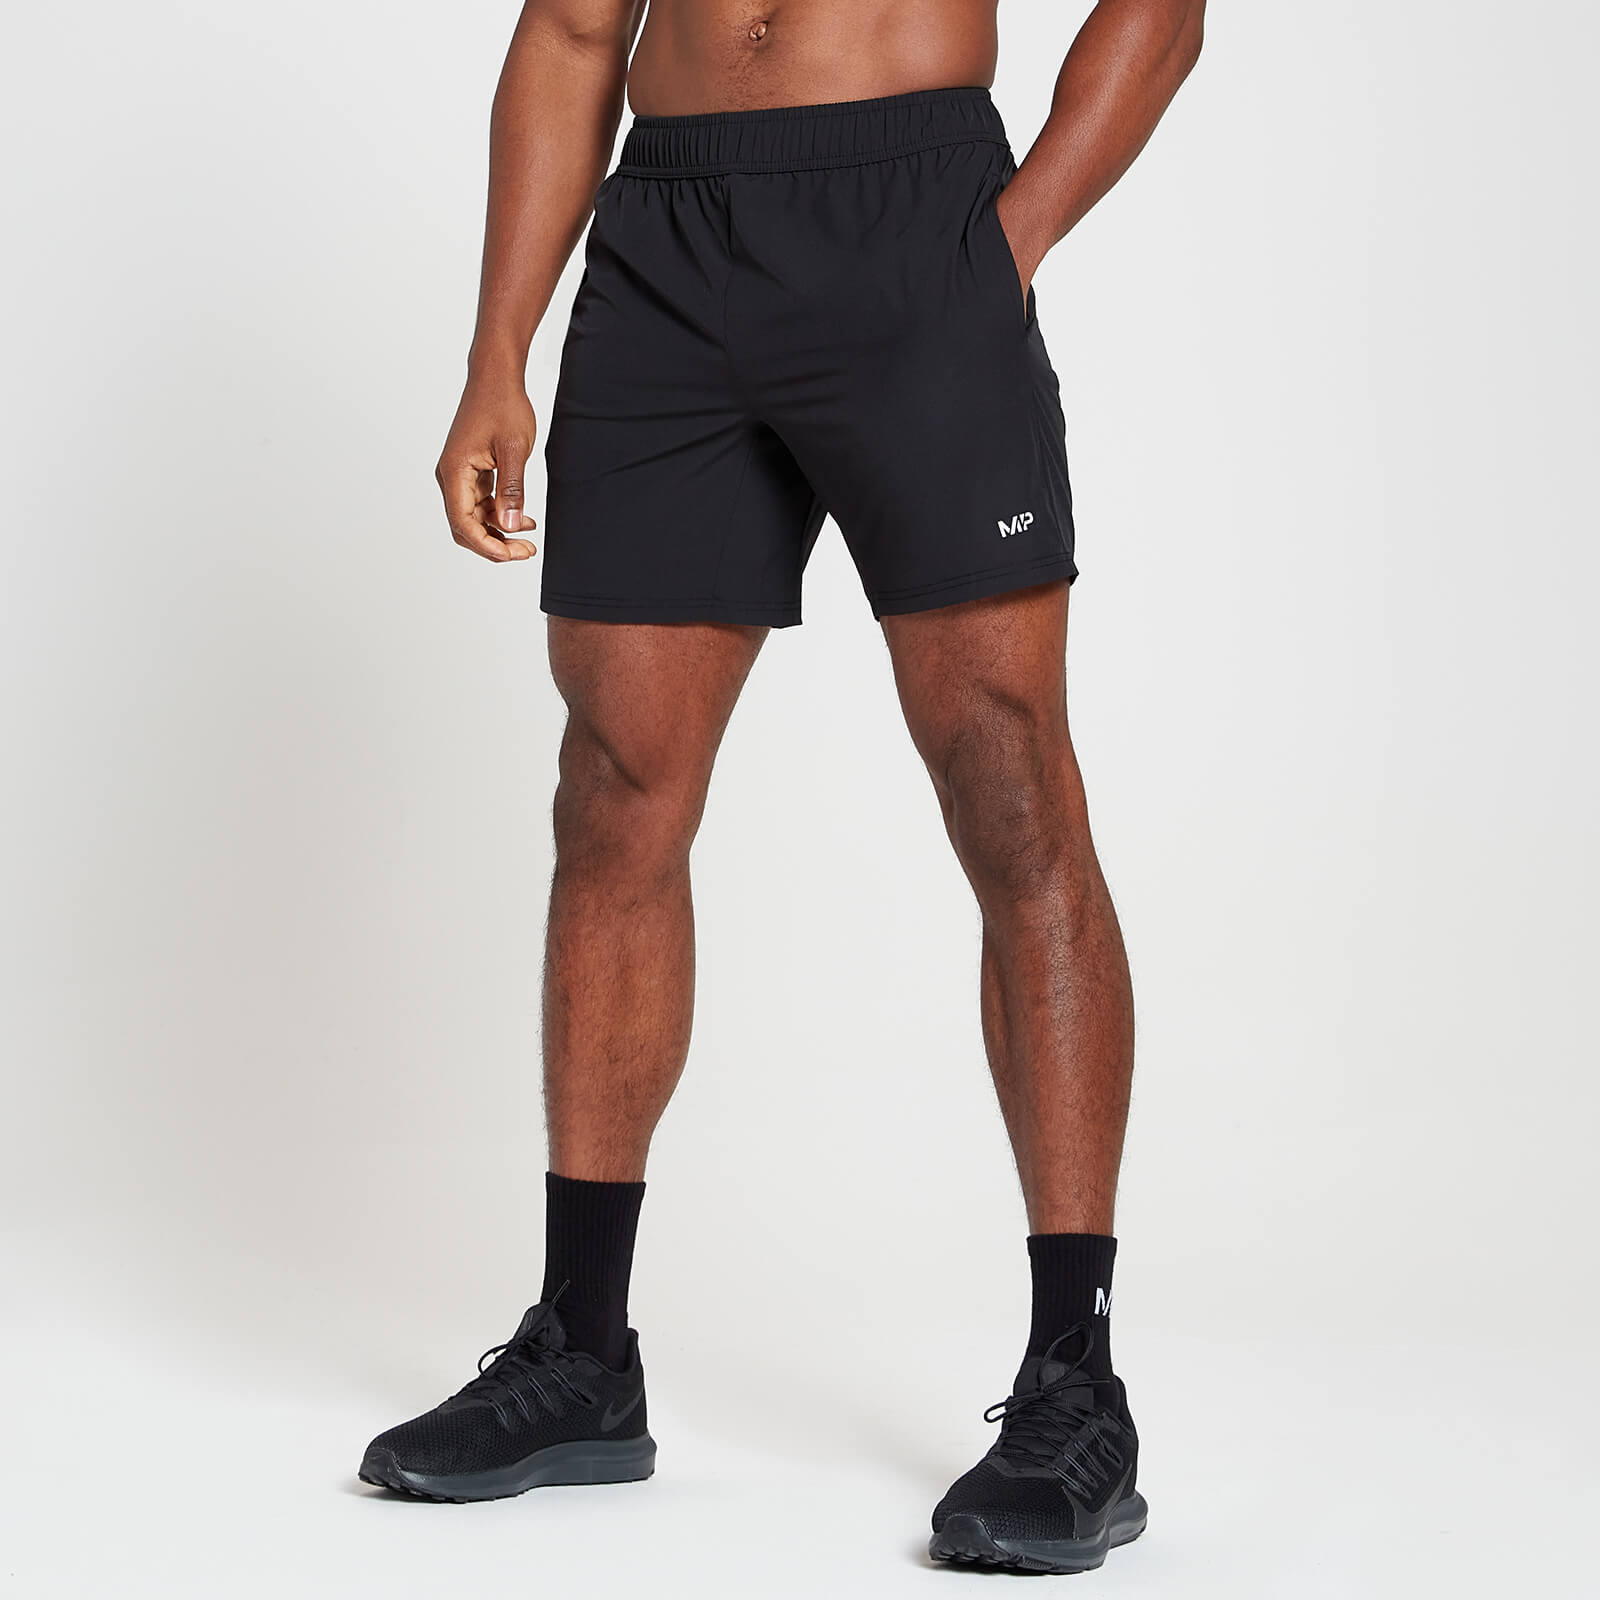 Купить MP Men's Run Graphic Training Shorts - Black - M, Myprotein International